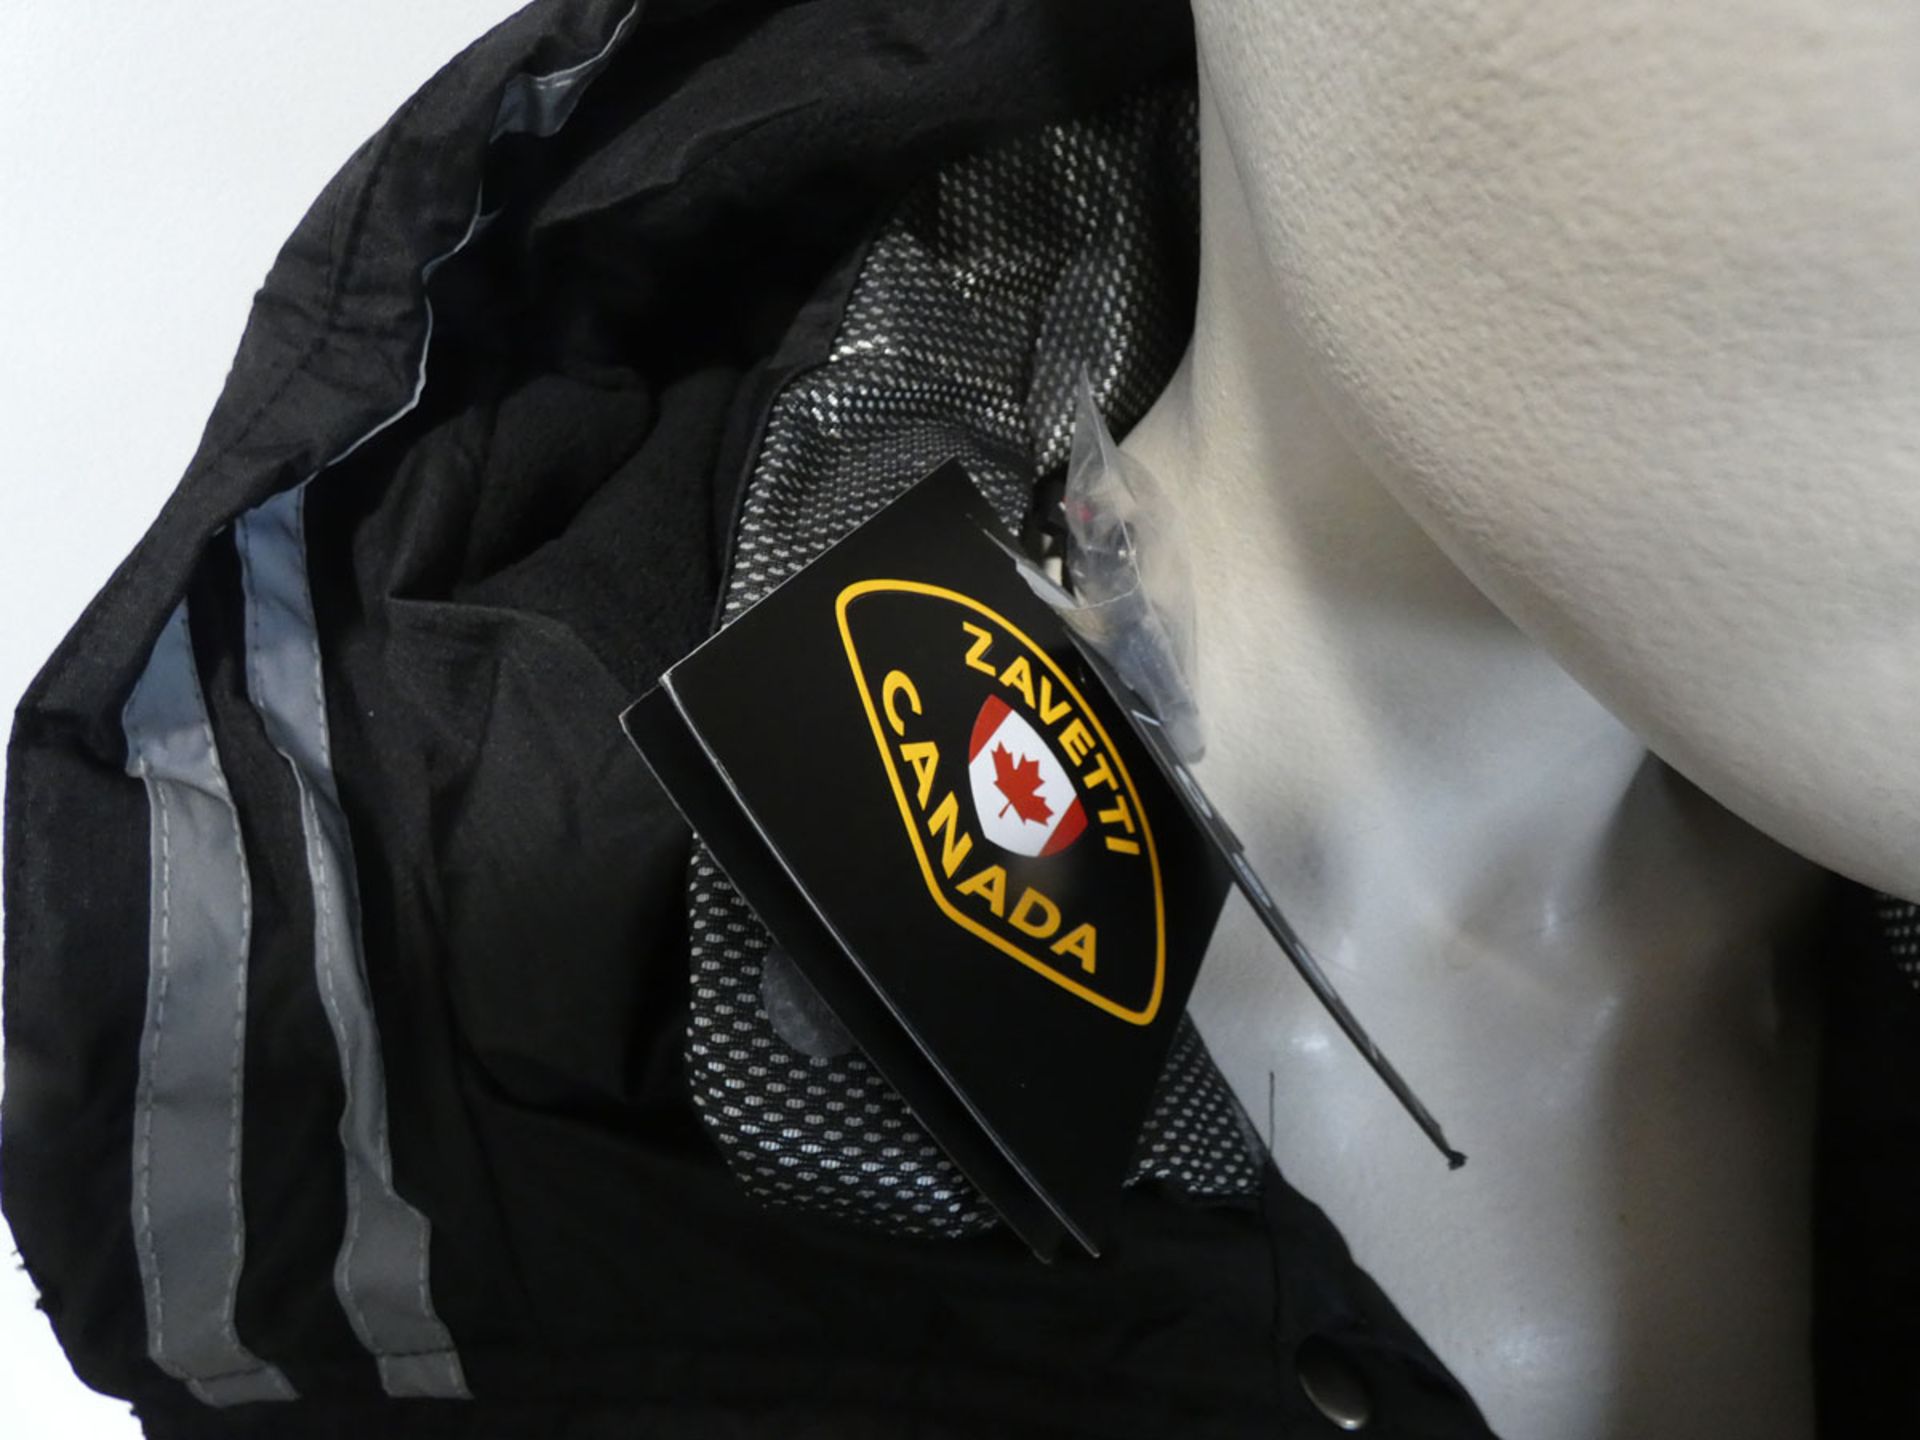 Zavetti Canada rovenzi ripstop puffer jacket in black size XS - Image 4 of 5